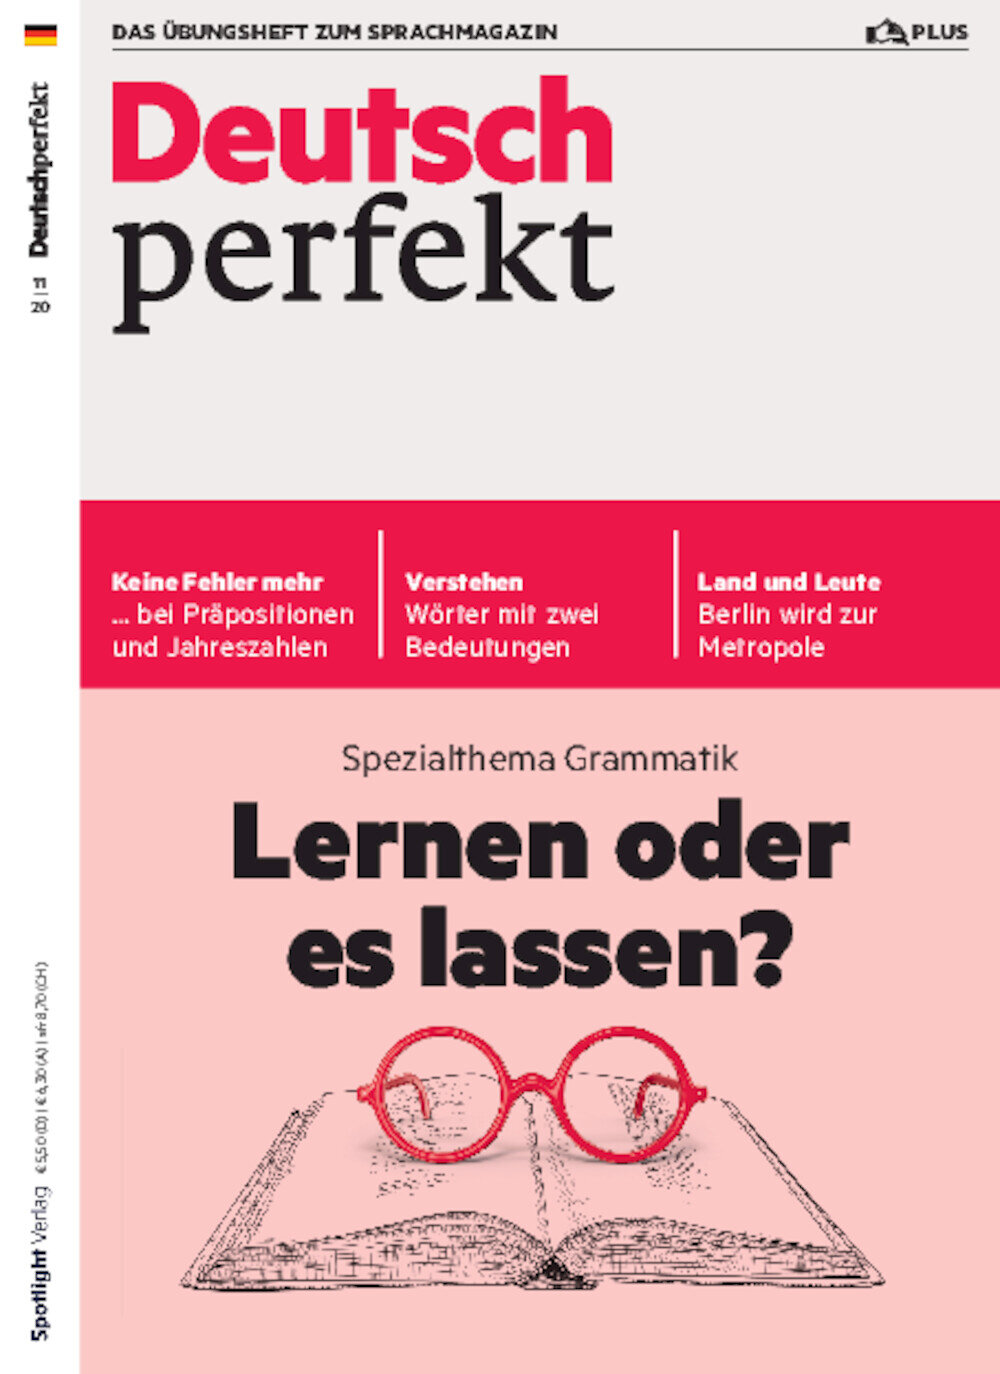 Deutsch perfekt PLUS ePaper 11/2020